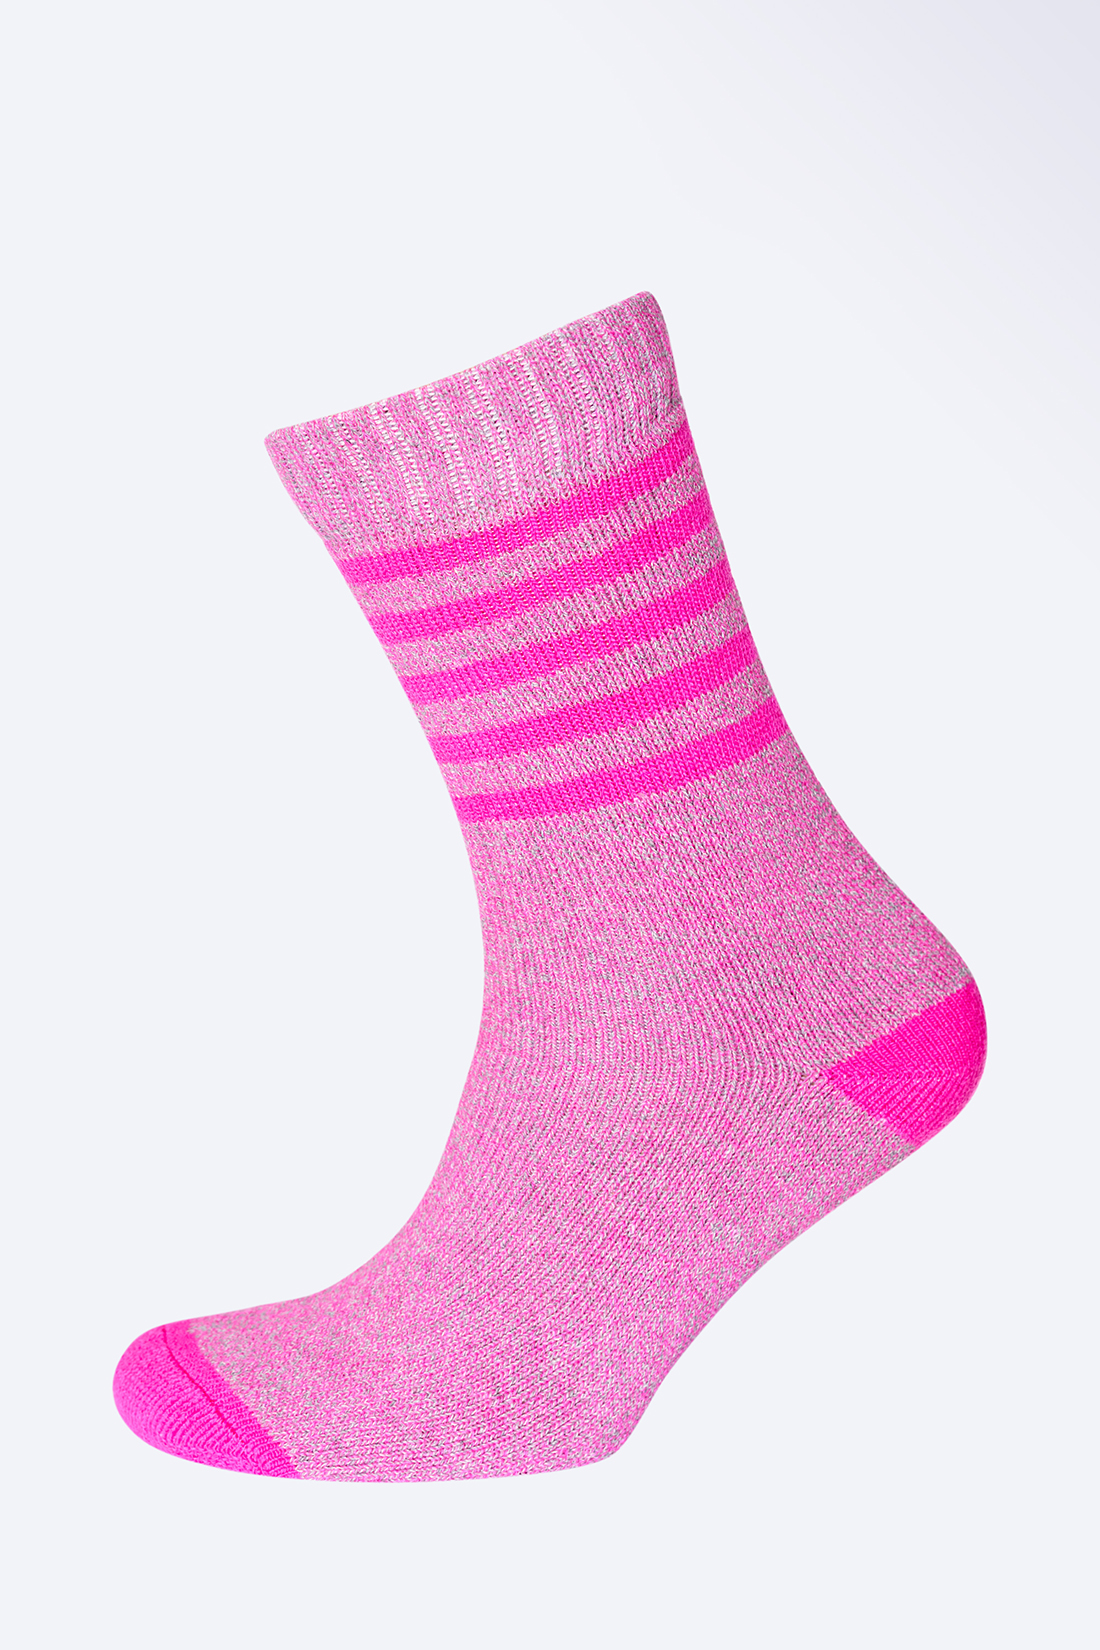 Махровые носки с полосками (арт. baon B399510), размер 35/37, цвет розовый Махровые носки с полосками (арт. baon B399510) - фото 1